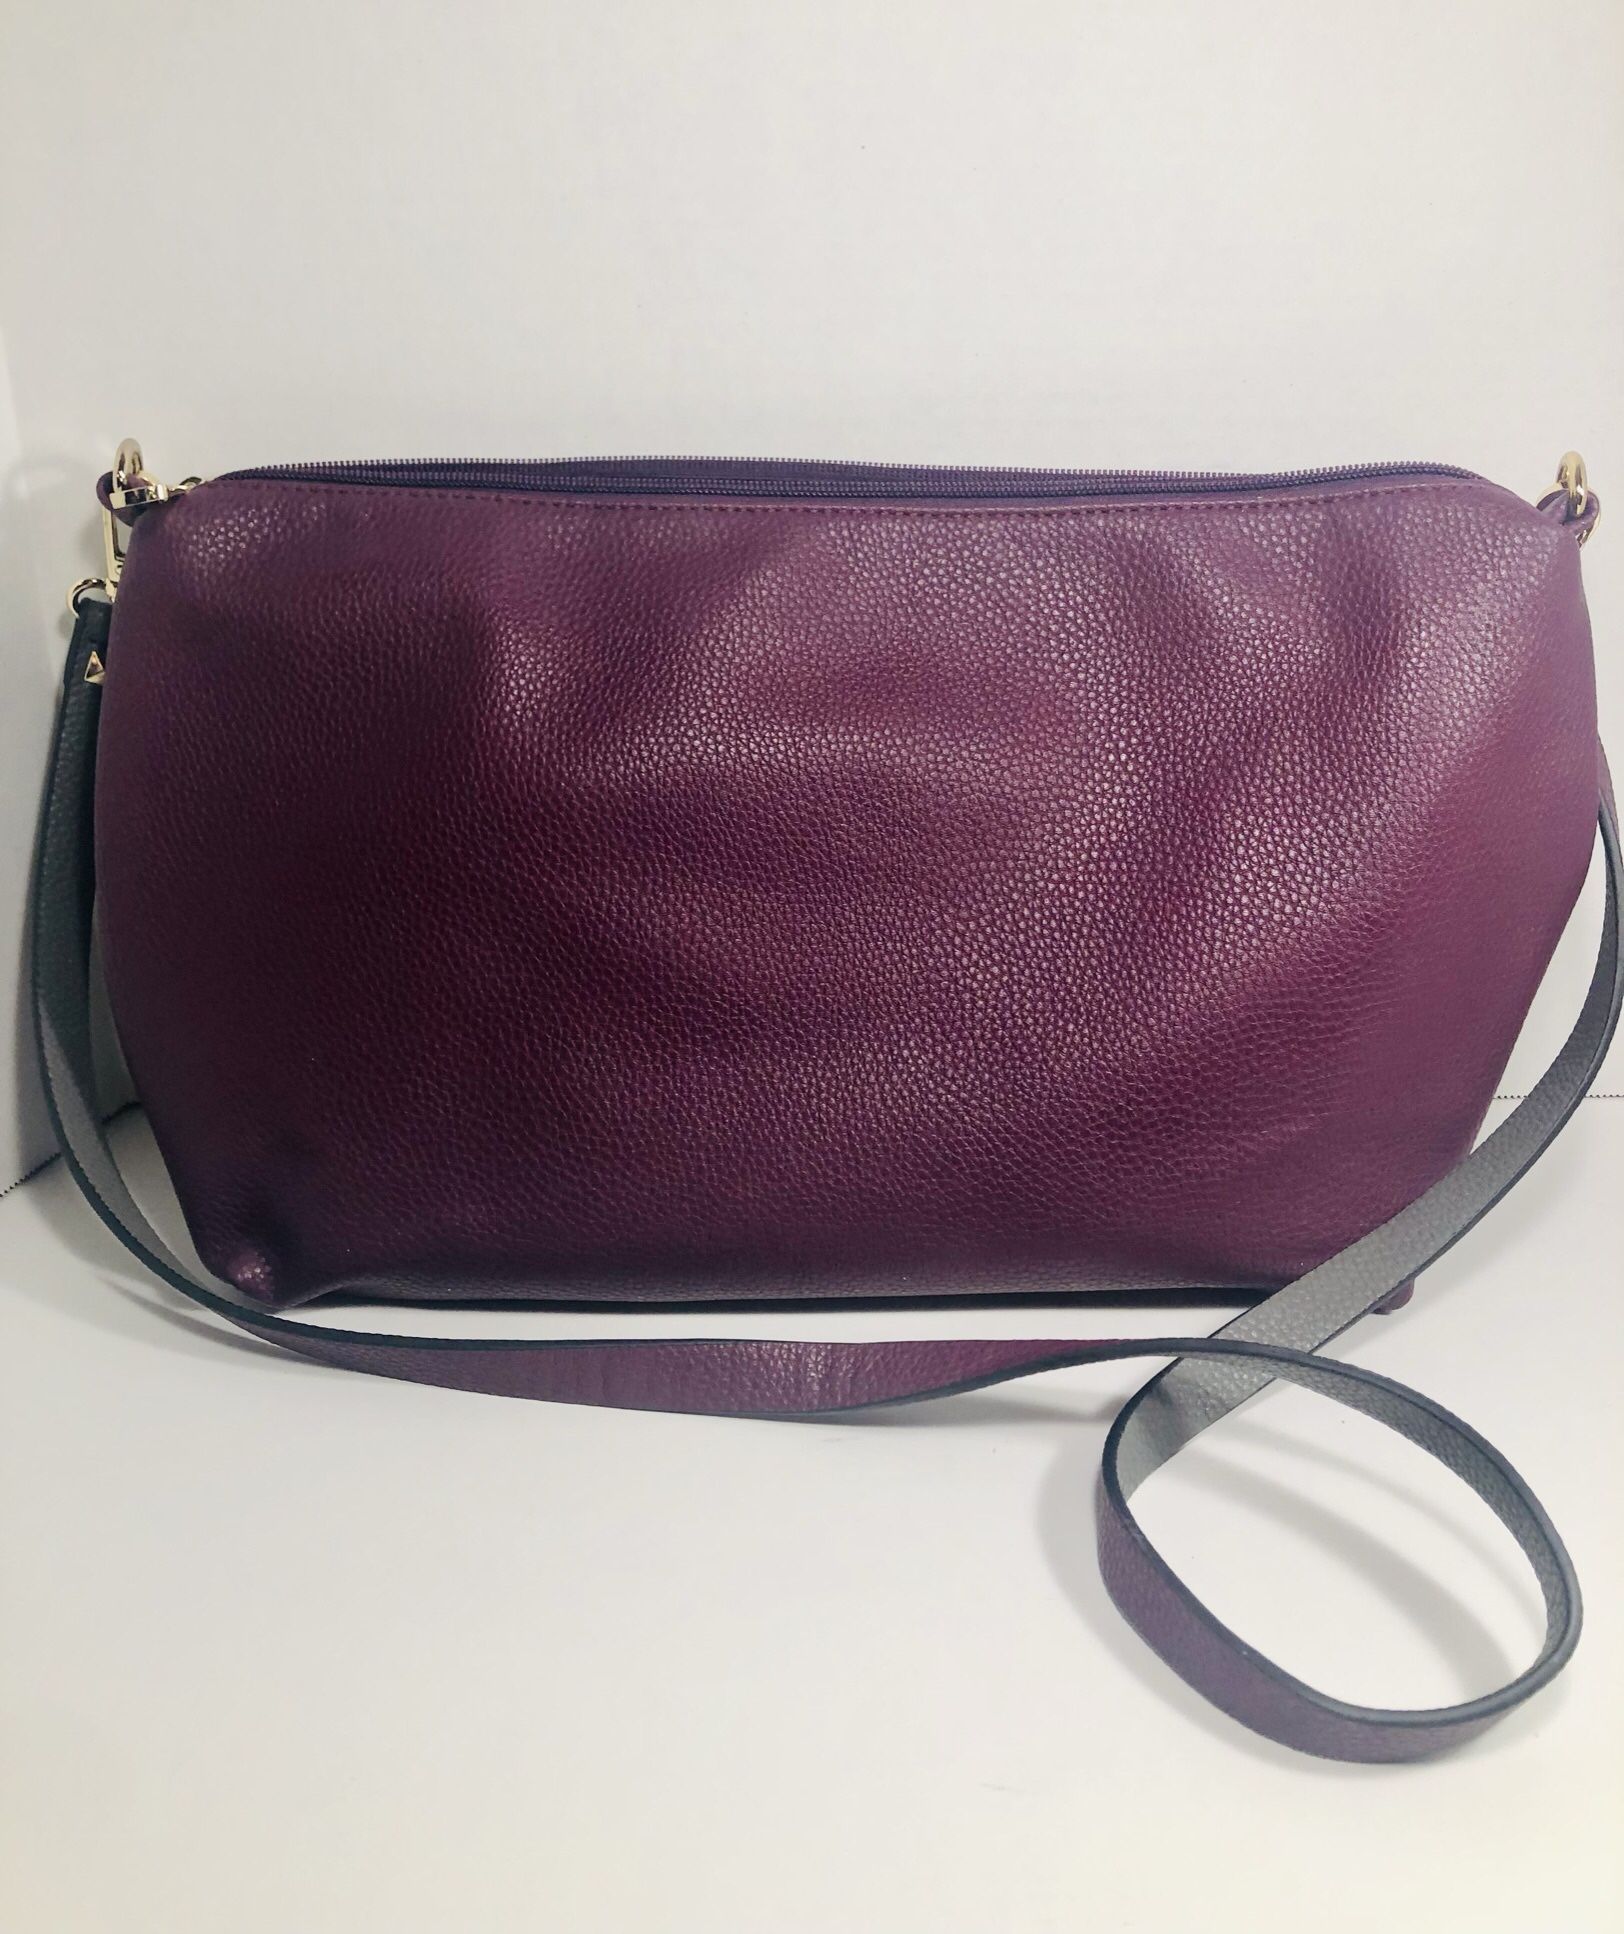  inzi handbag.  Like new condition no defects  Beautiful shade of purple